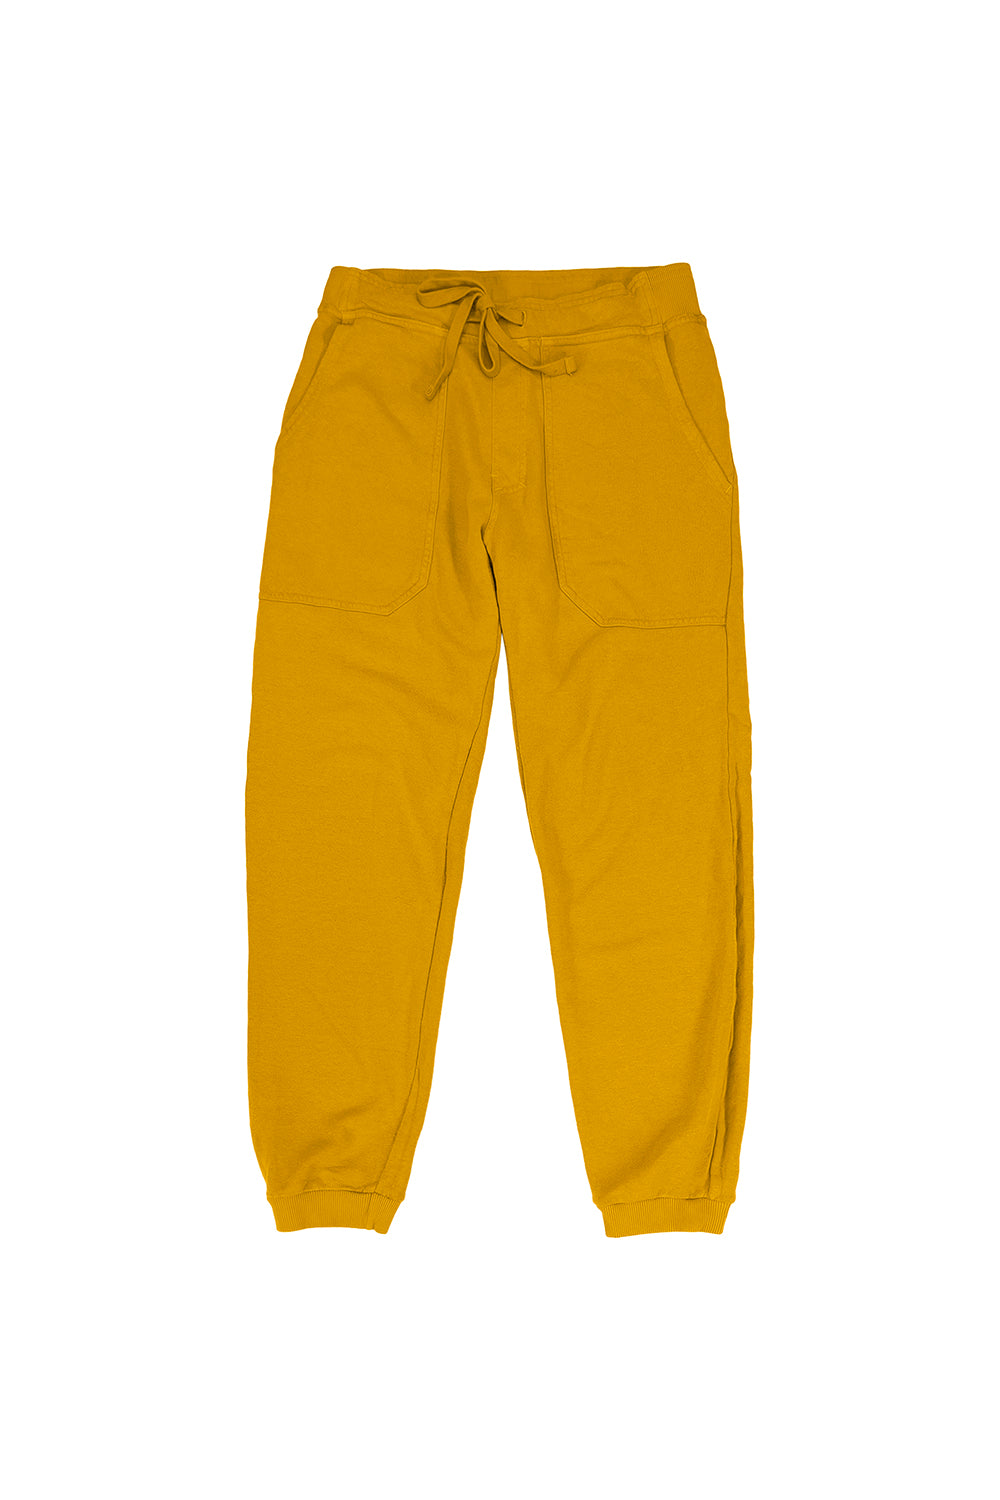 Rockaway Sweatpant | Jungmaven Hemp Clothing & Accessories / Color: Spicy Mustard